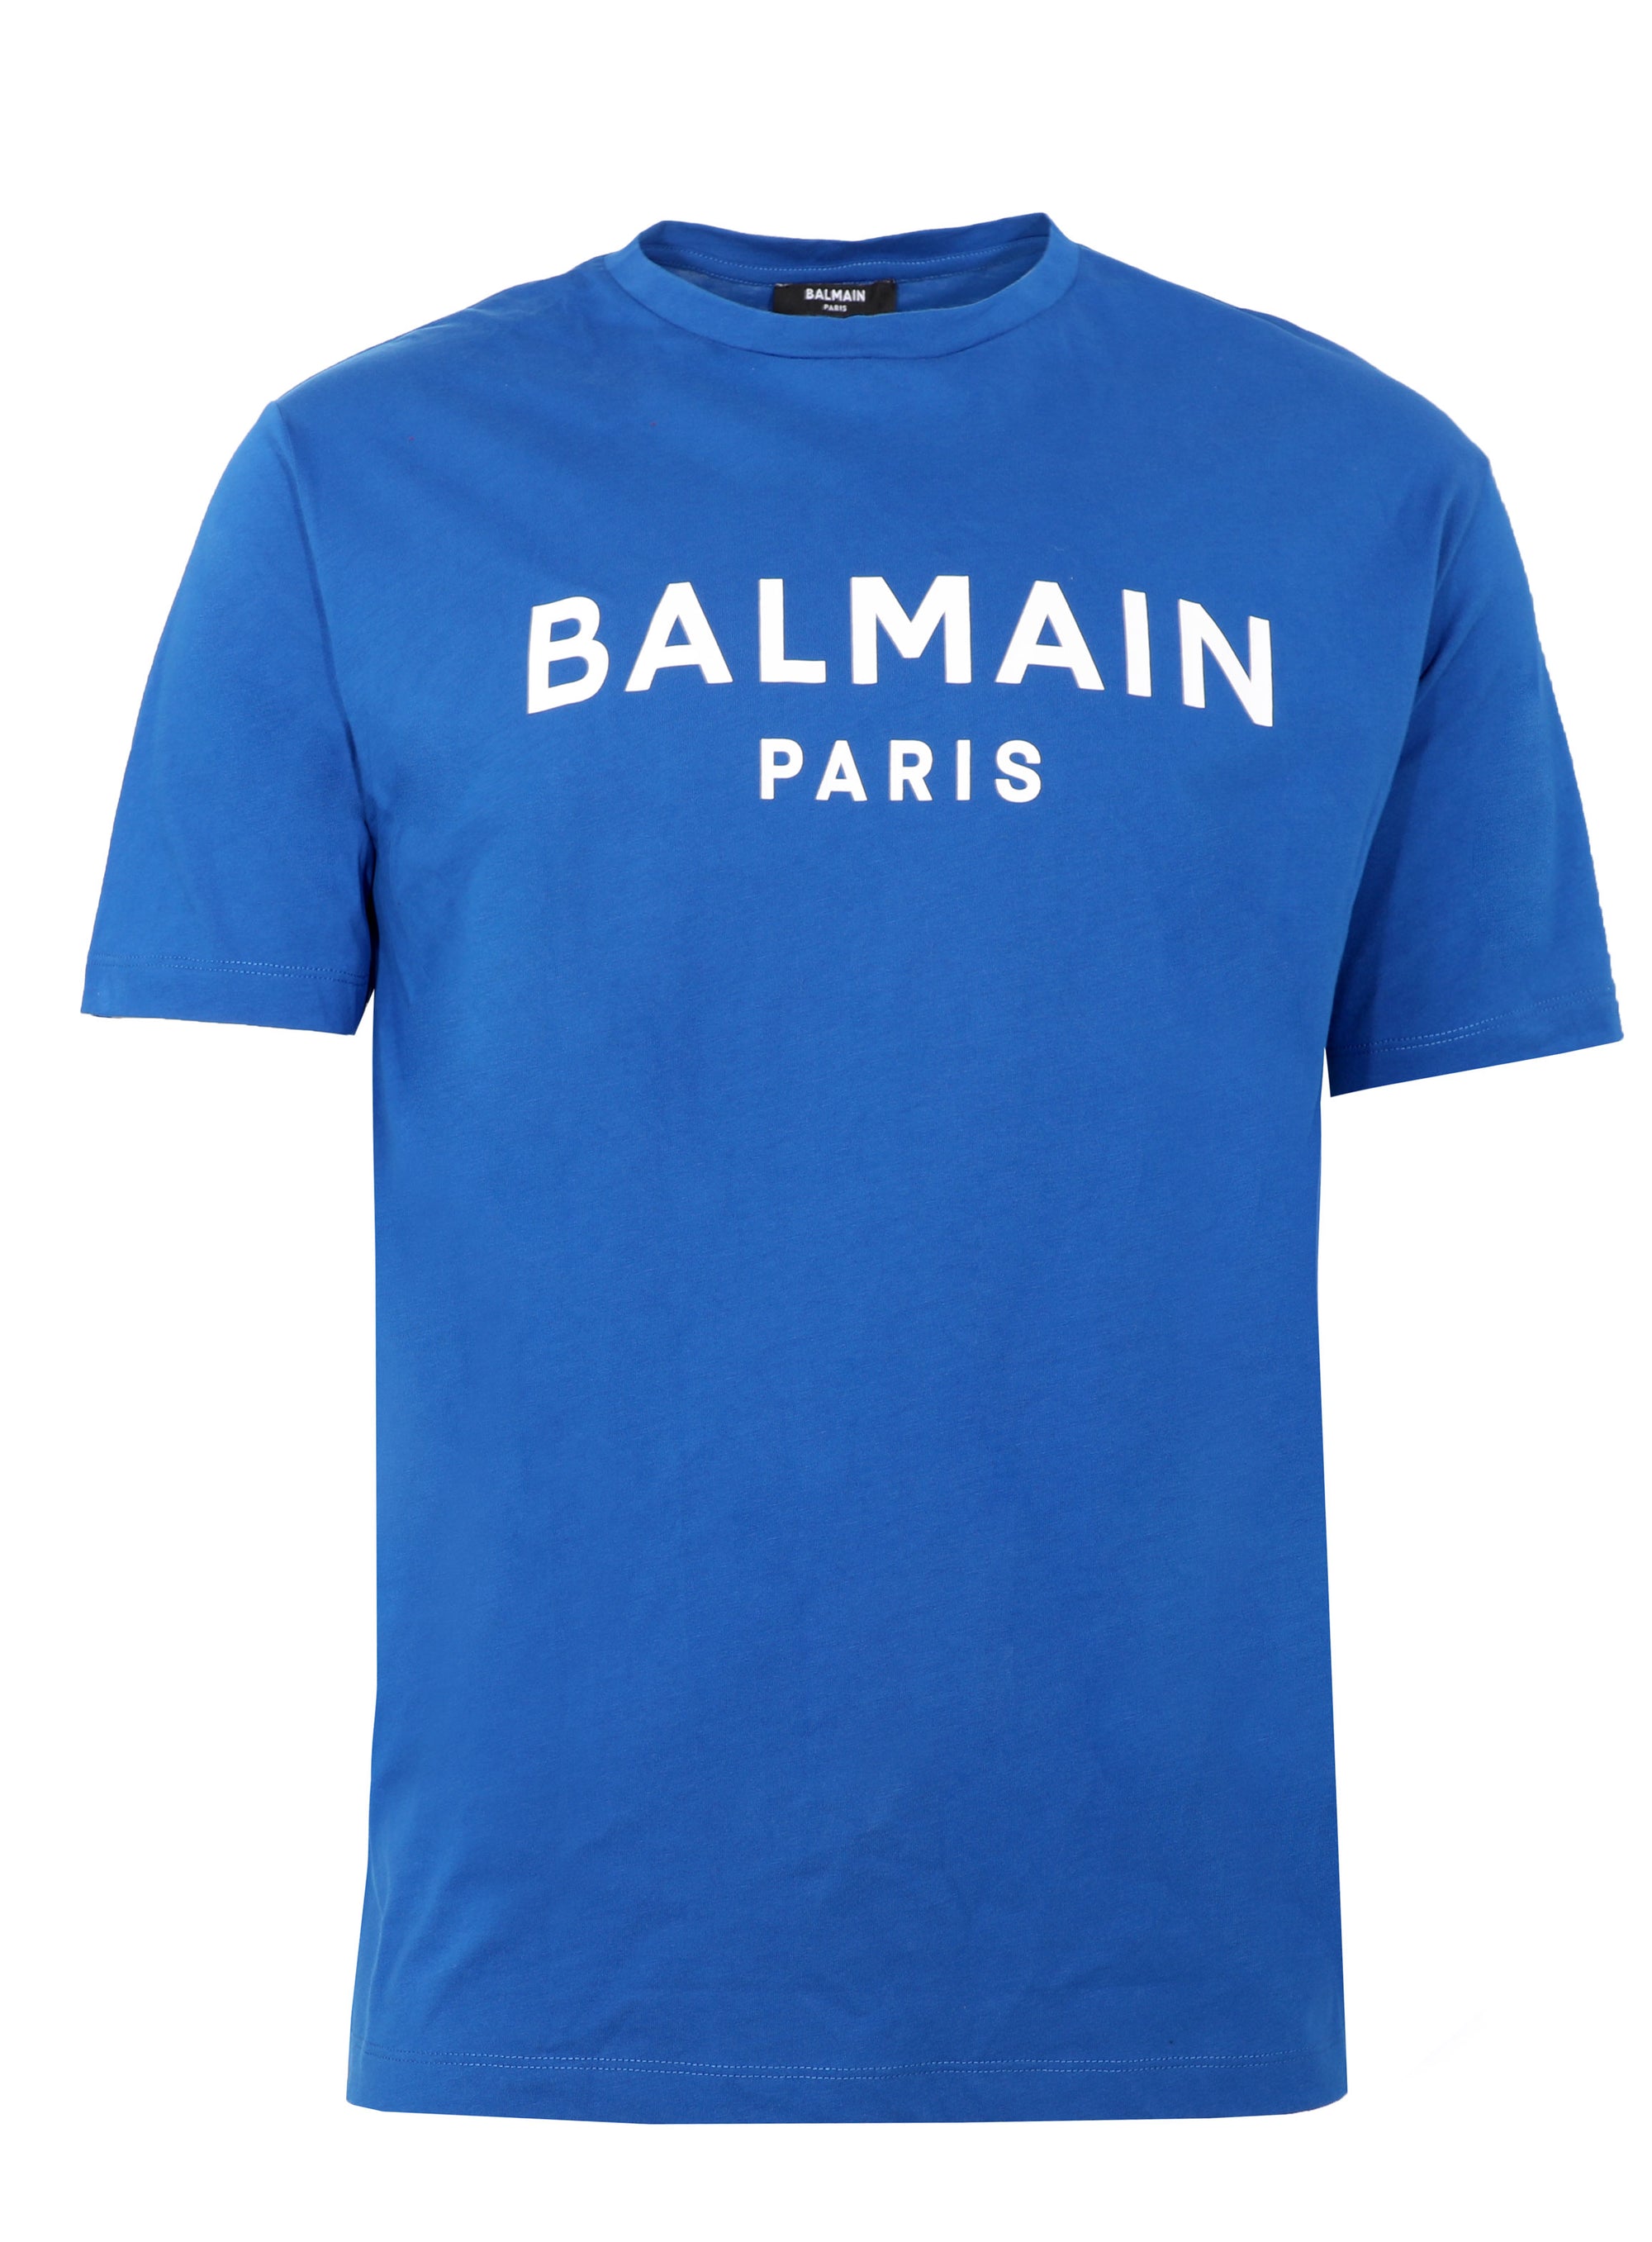 BALMAIN PRINTED T-SHIRT STRAIGHT FIT - ELECTRIC BLUE